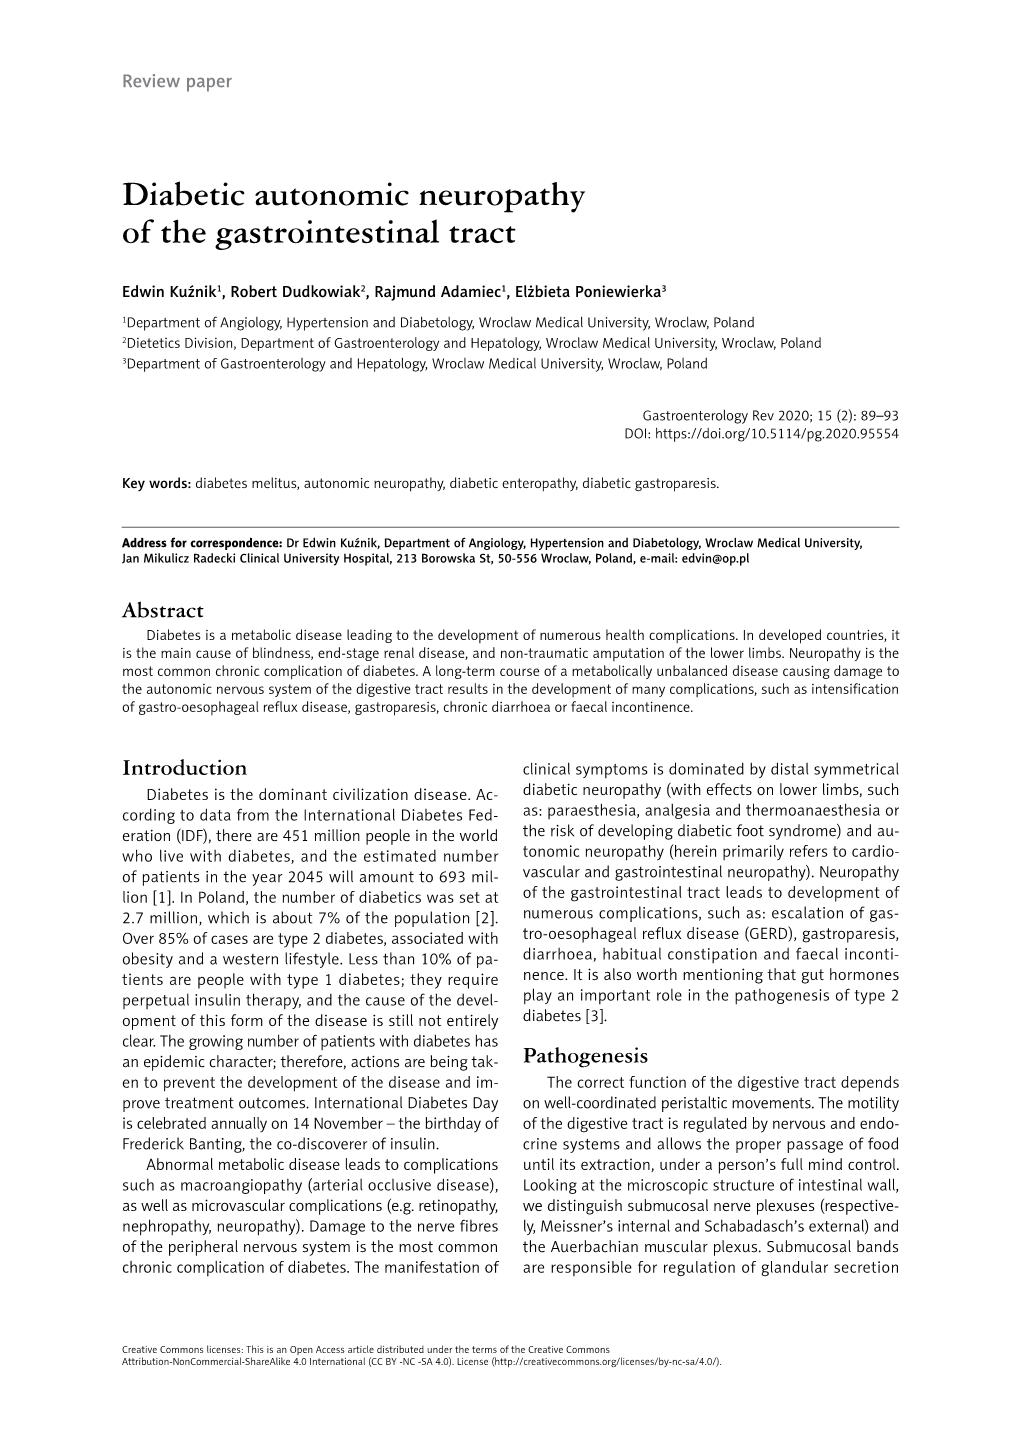 Diabetic Autonomic Neuropathy of the Gastrointestinal Tract